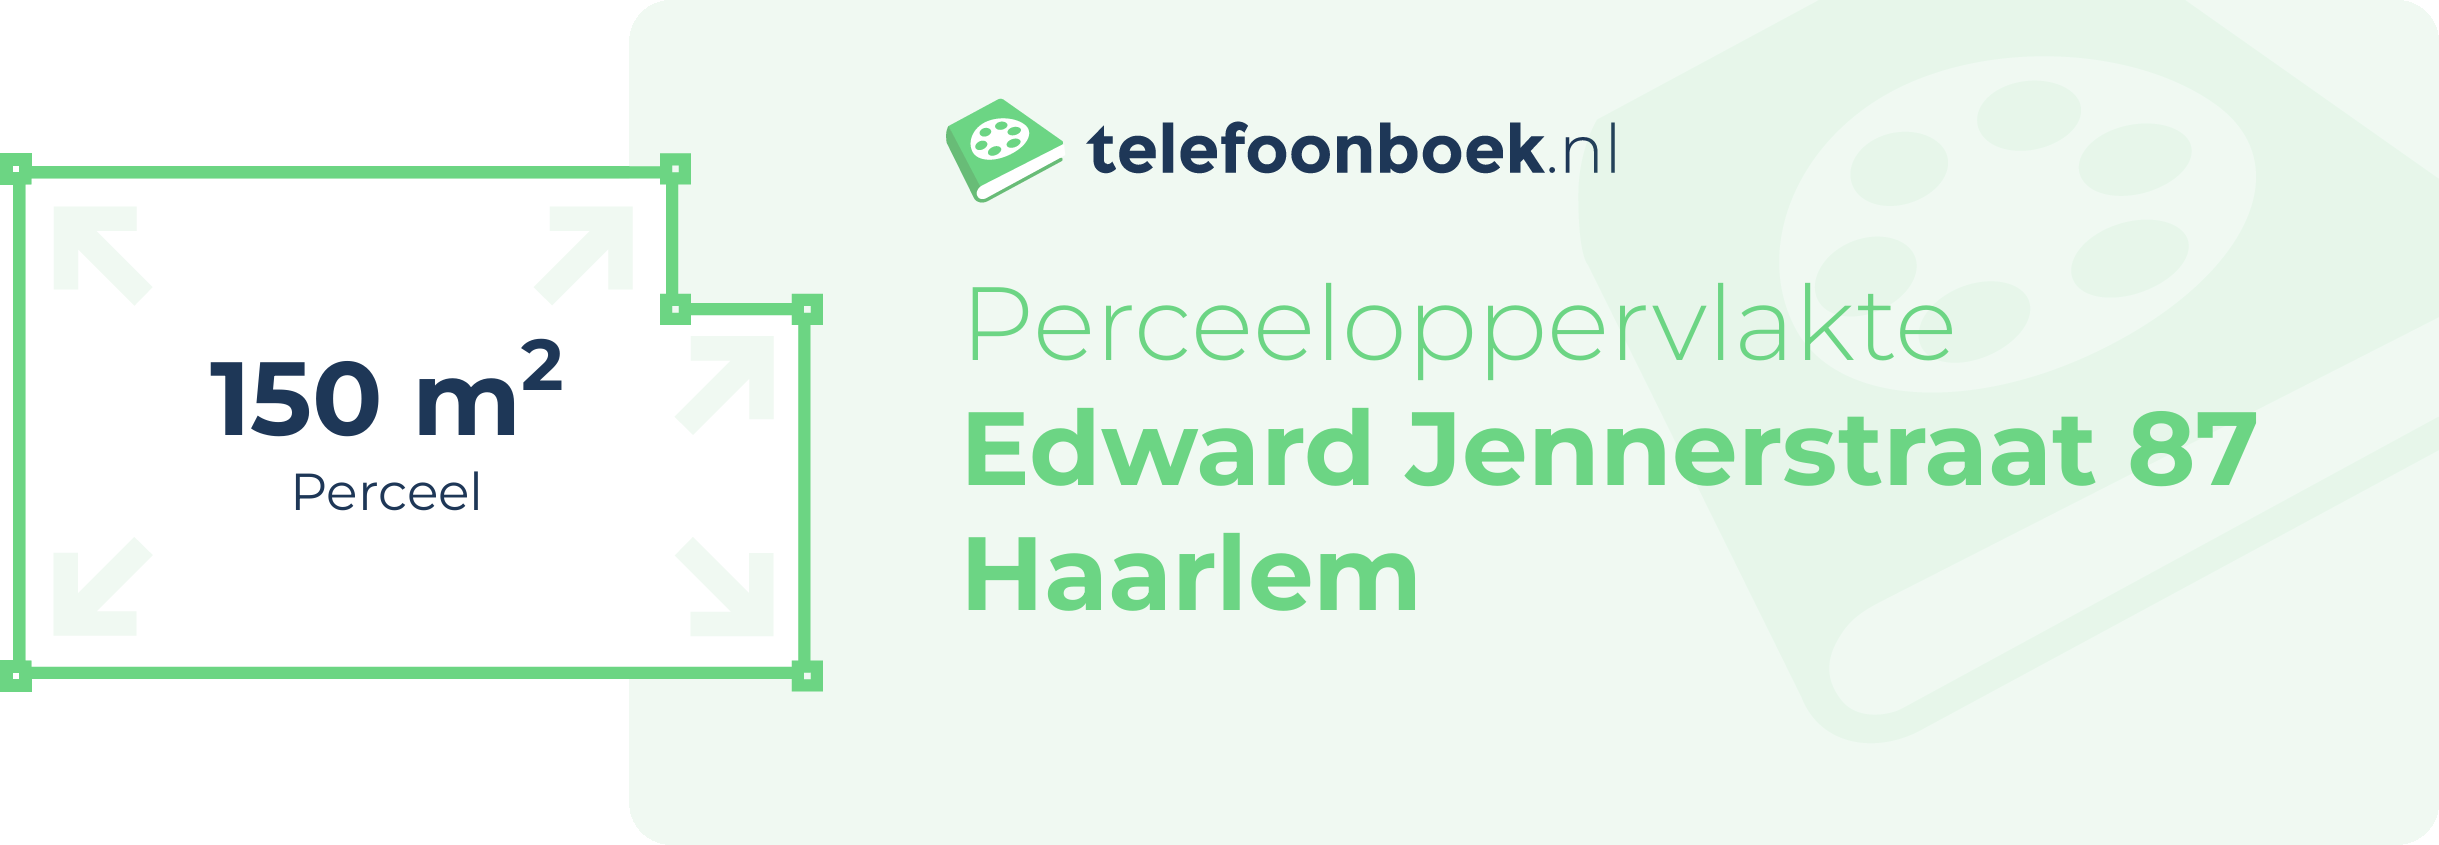 Perceeloppervlakte Edward Jennerstraat 87 Haarlem